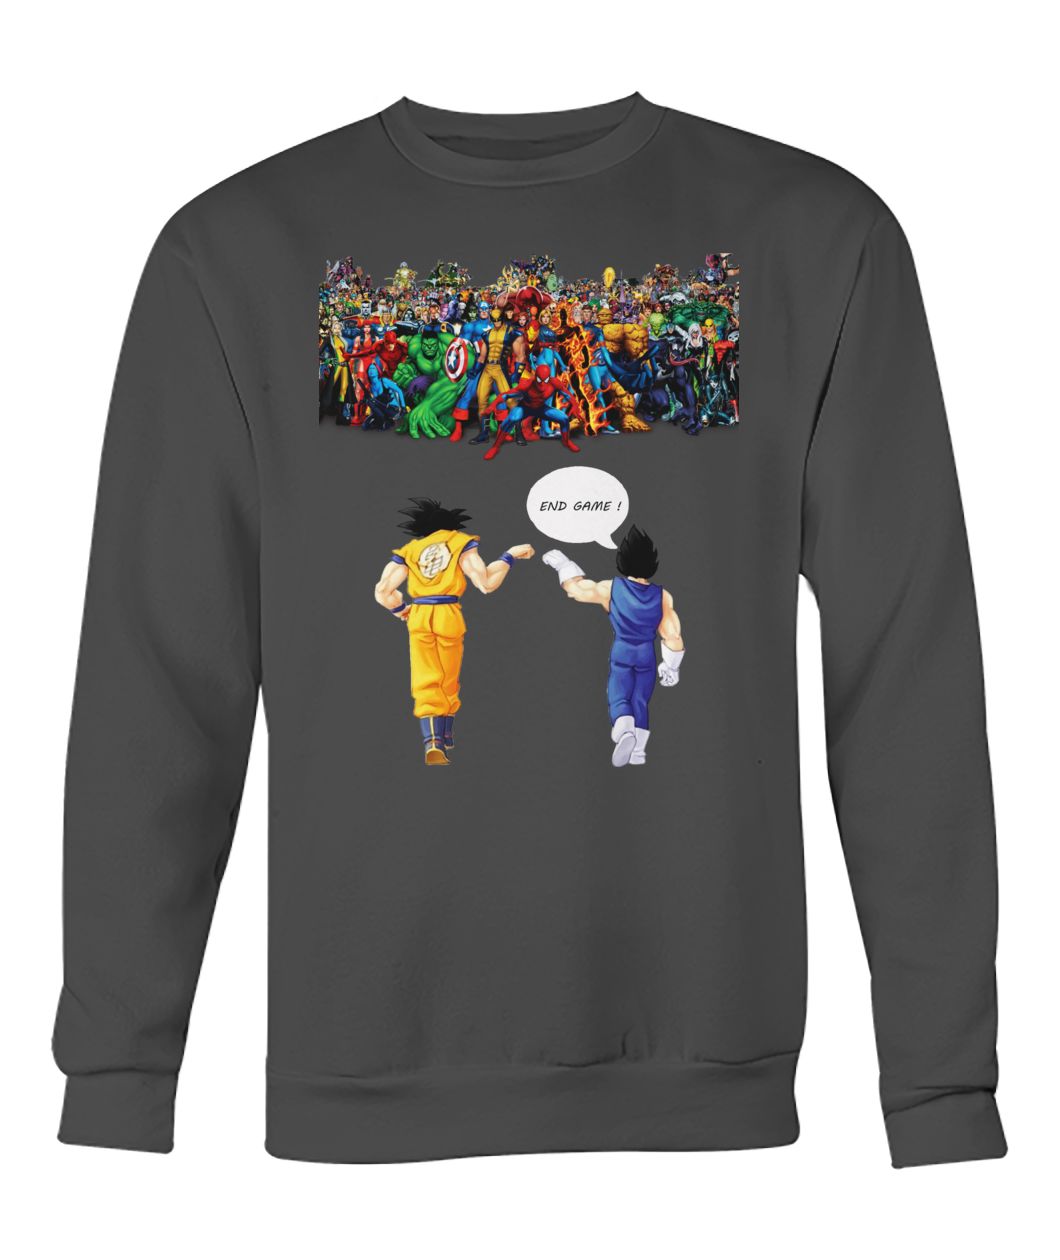 Vegeta goku dragon ball vs marvel heroes fighting marvel avengers endgame crew neck sweatshirt